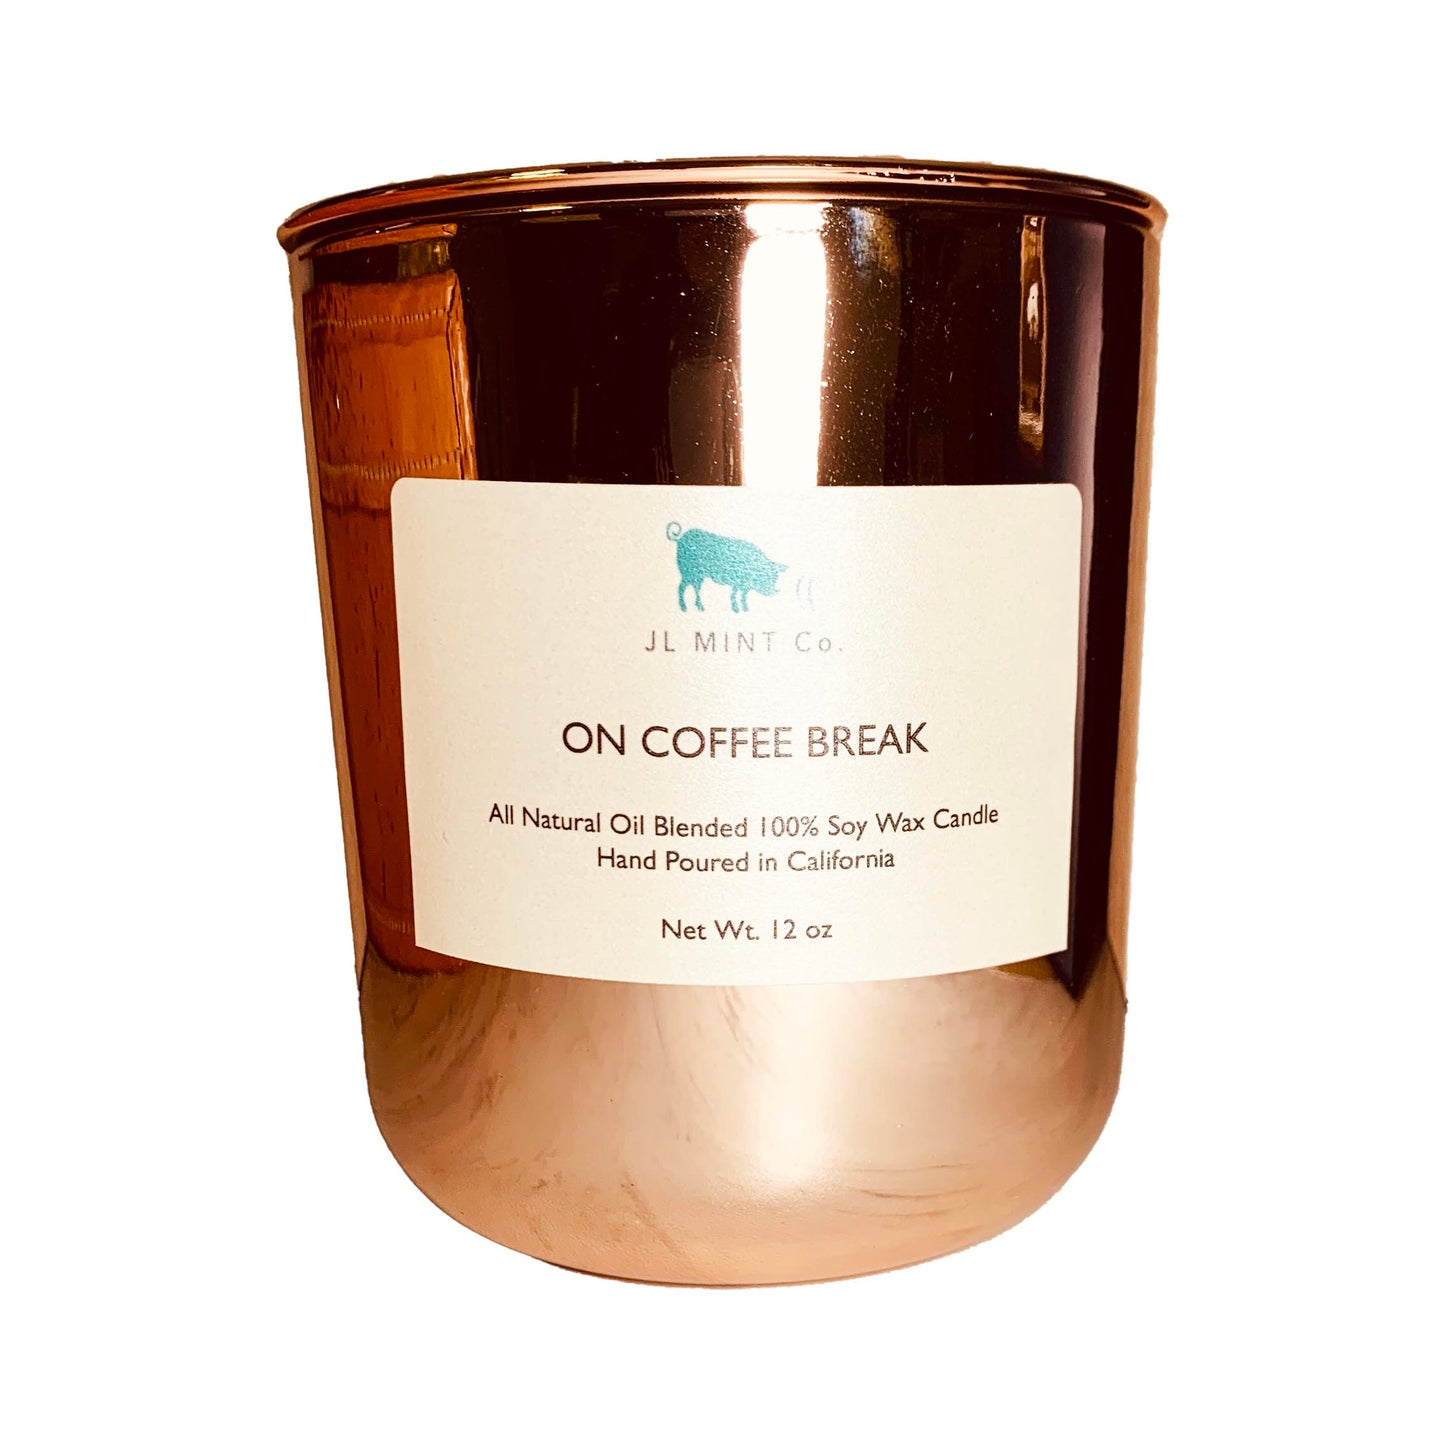 On COFFEE BREAK JL Mint Co. Soy Wax Large Candle